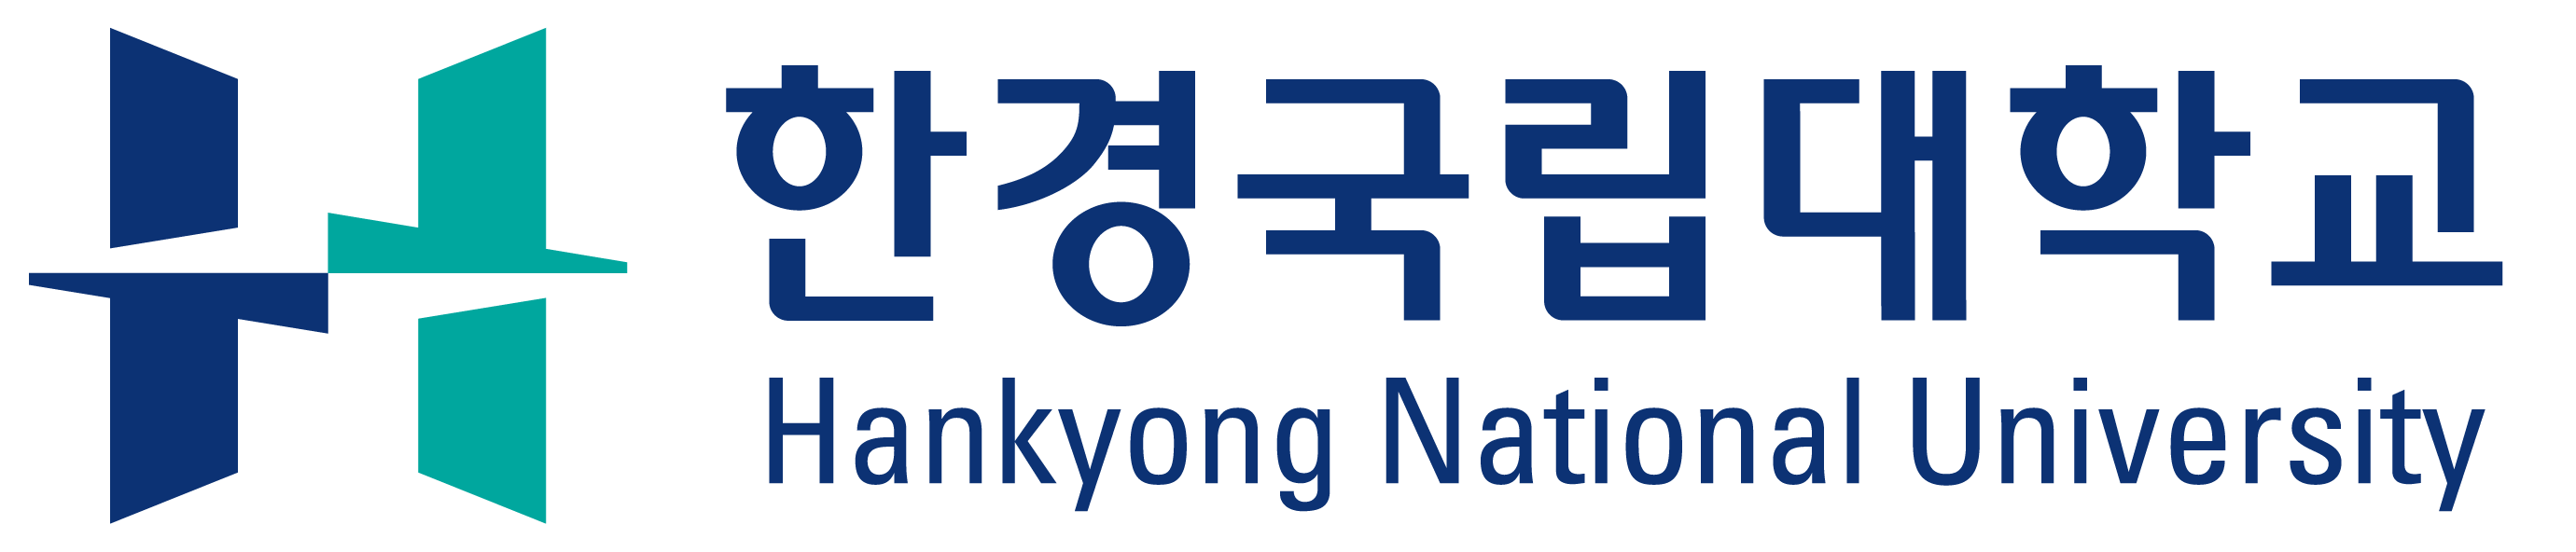 Hankyong National University Horizontal Signature (ko & en).png